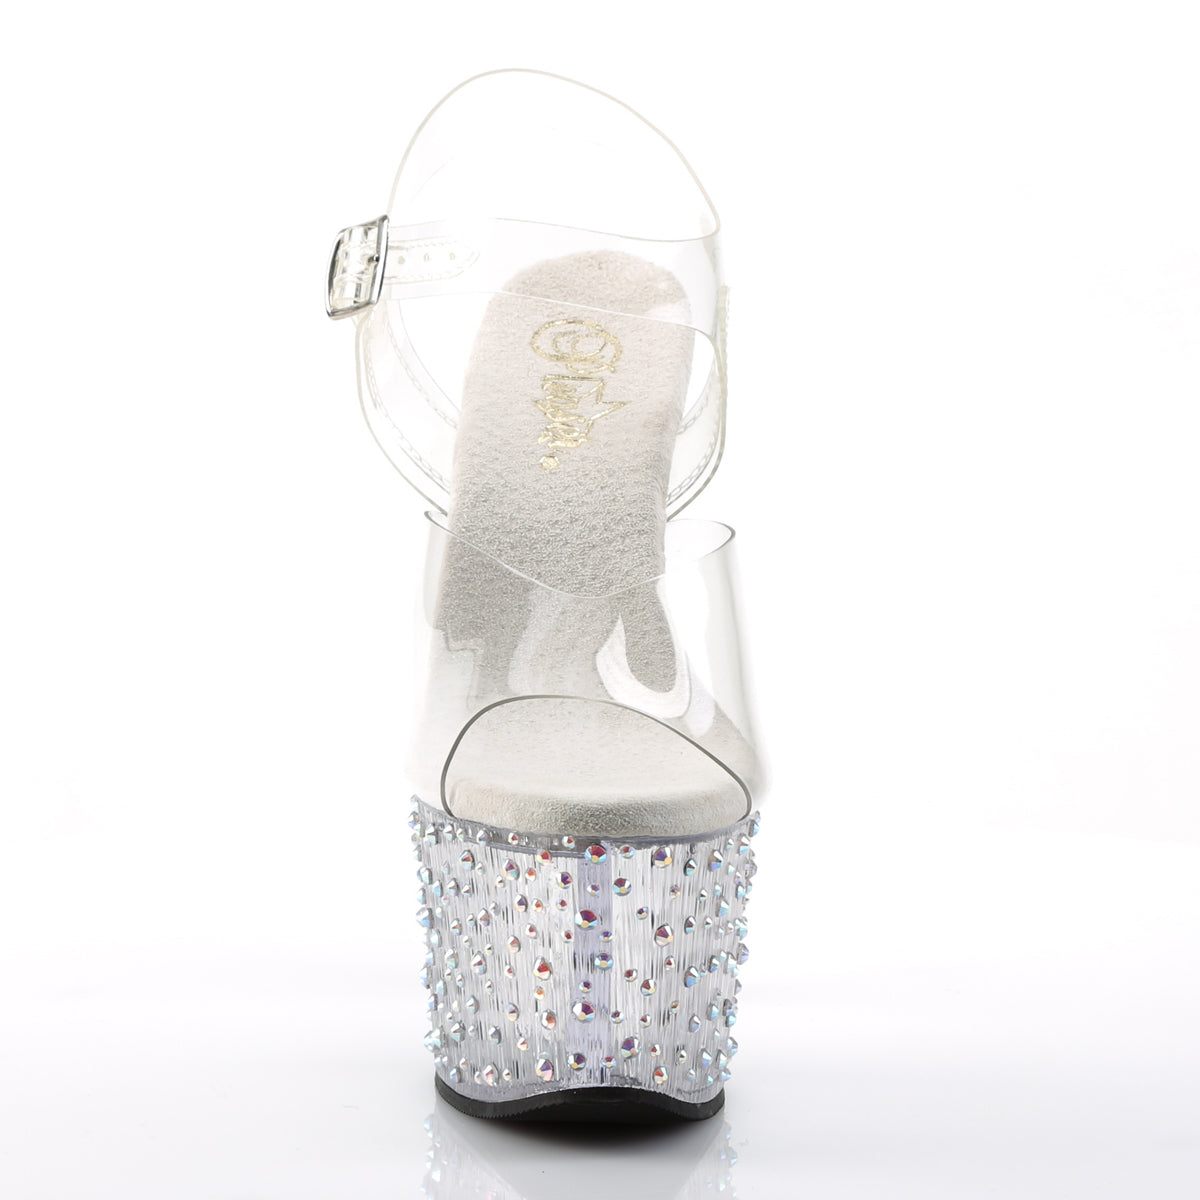 STARDANCE-708 7" Heel Clear Silver Pole Dancing Platforms-Pleaser- Sexy Shoes Alternative Footwear